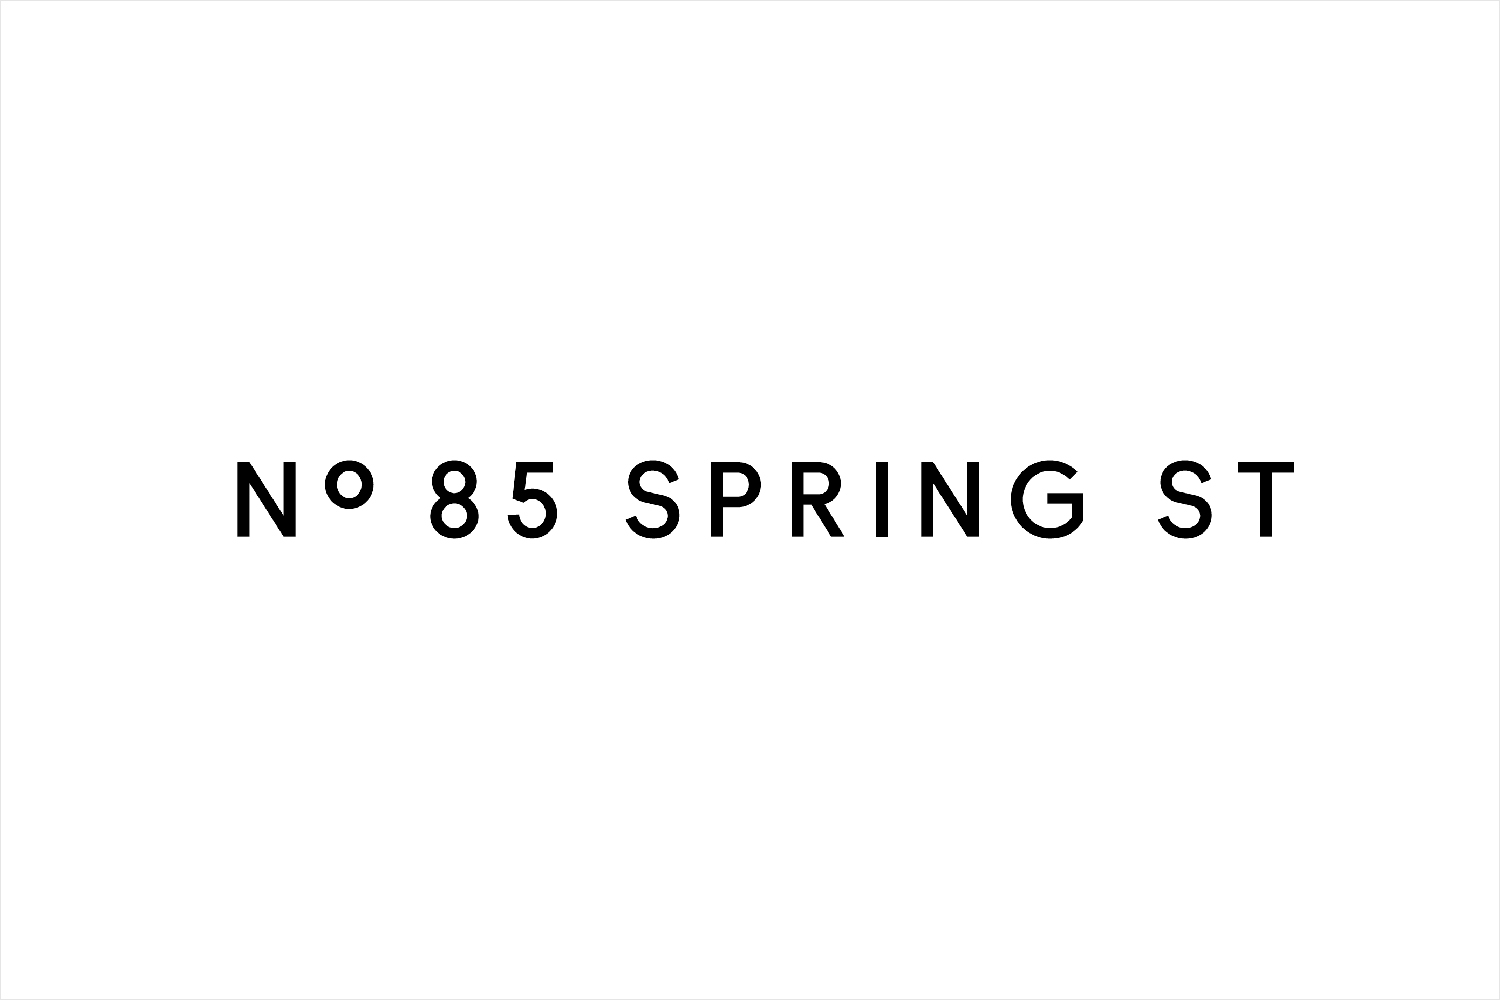 Creative Logotype Gallery & Inspiration: 85 Spring Street by Studio Ongarato